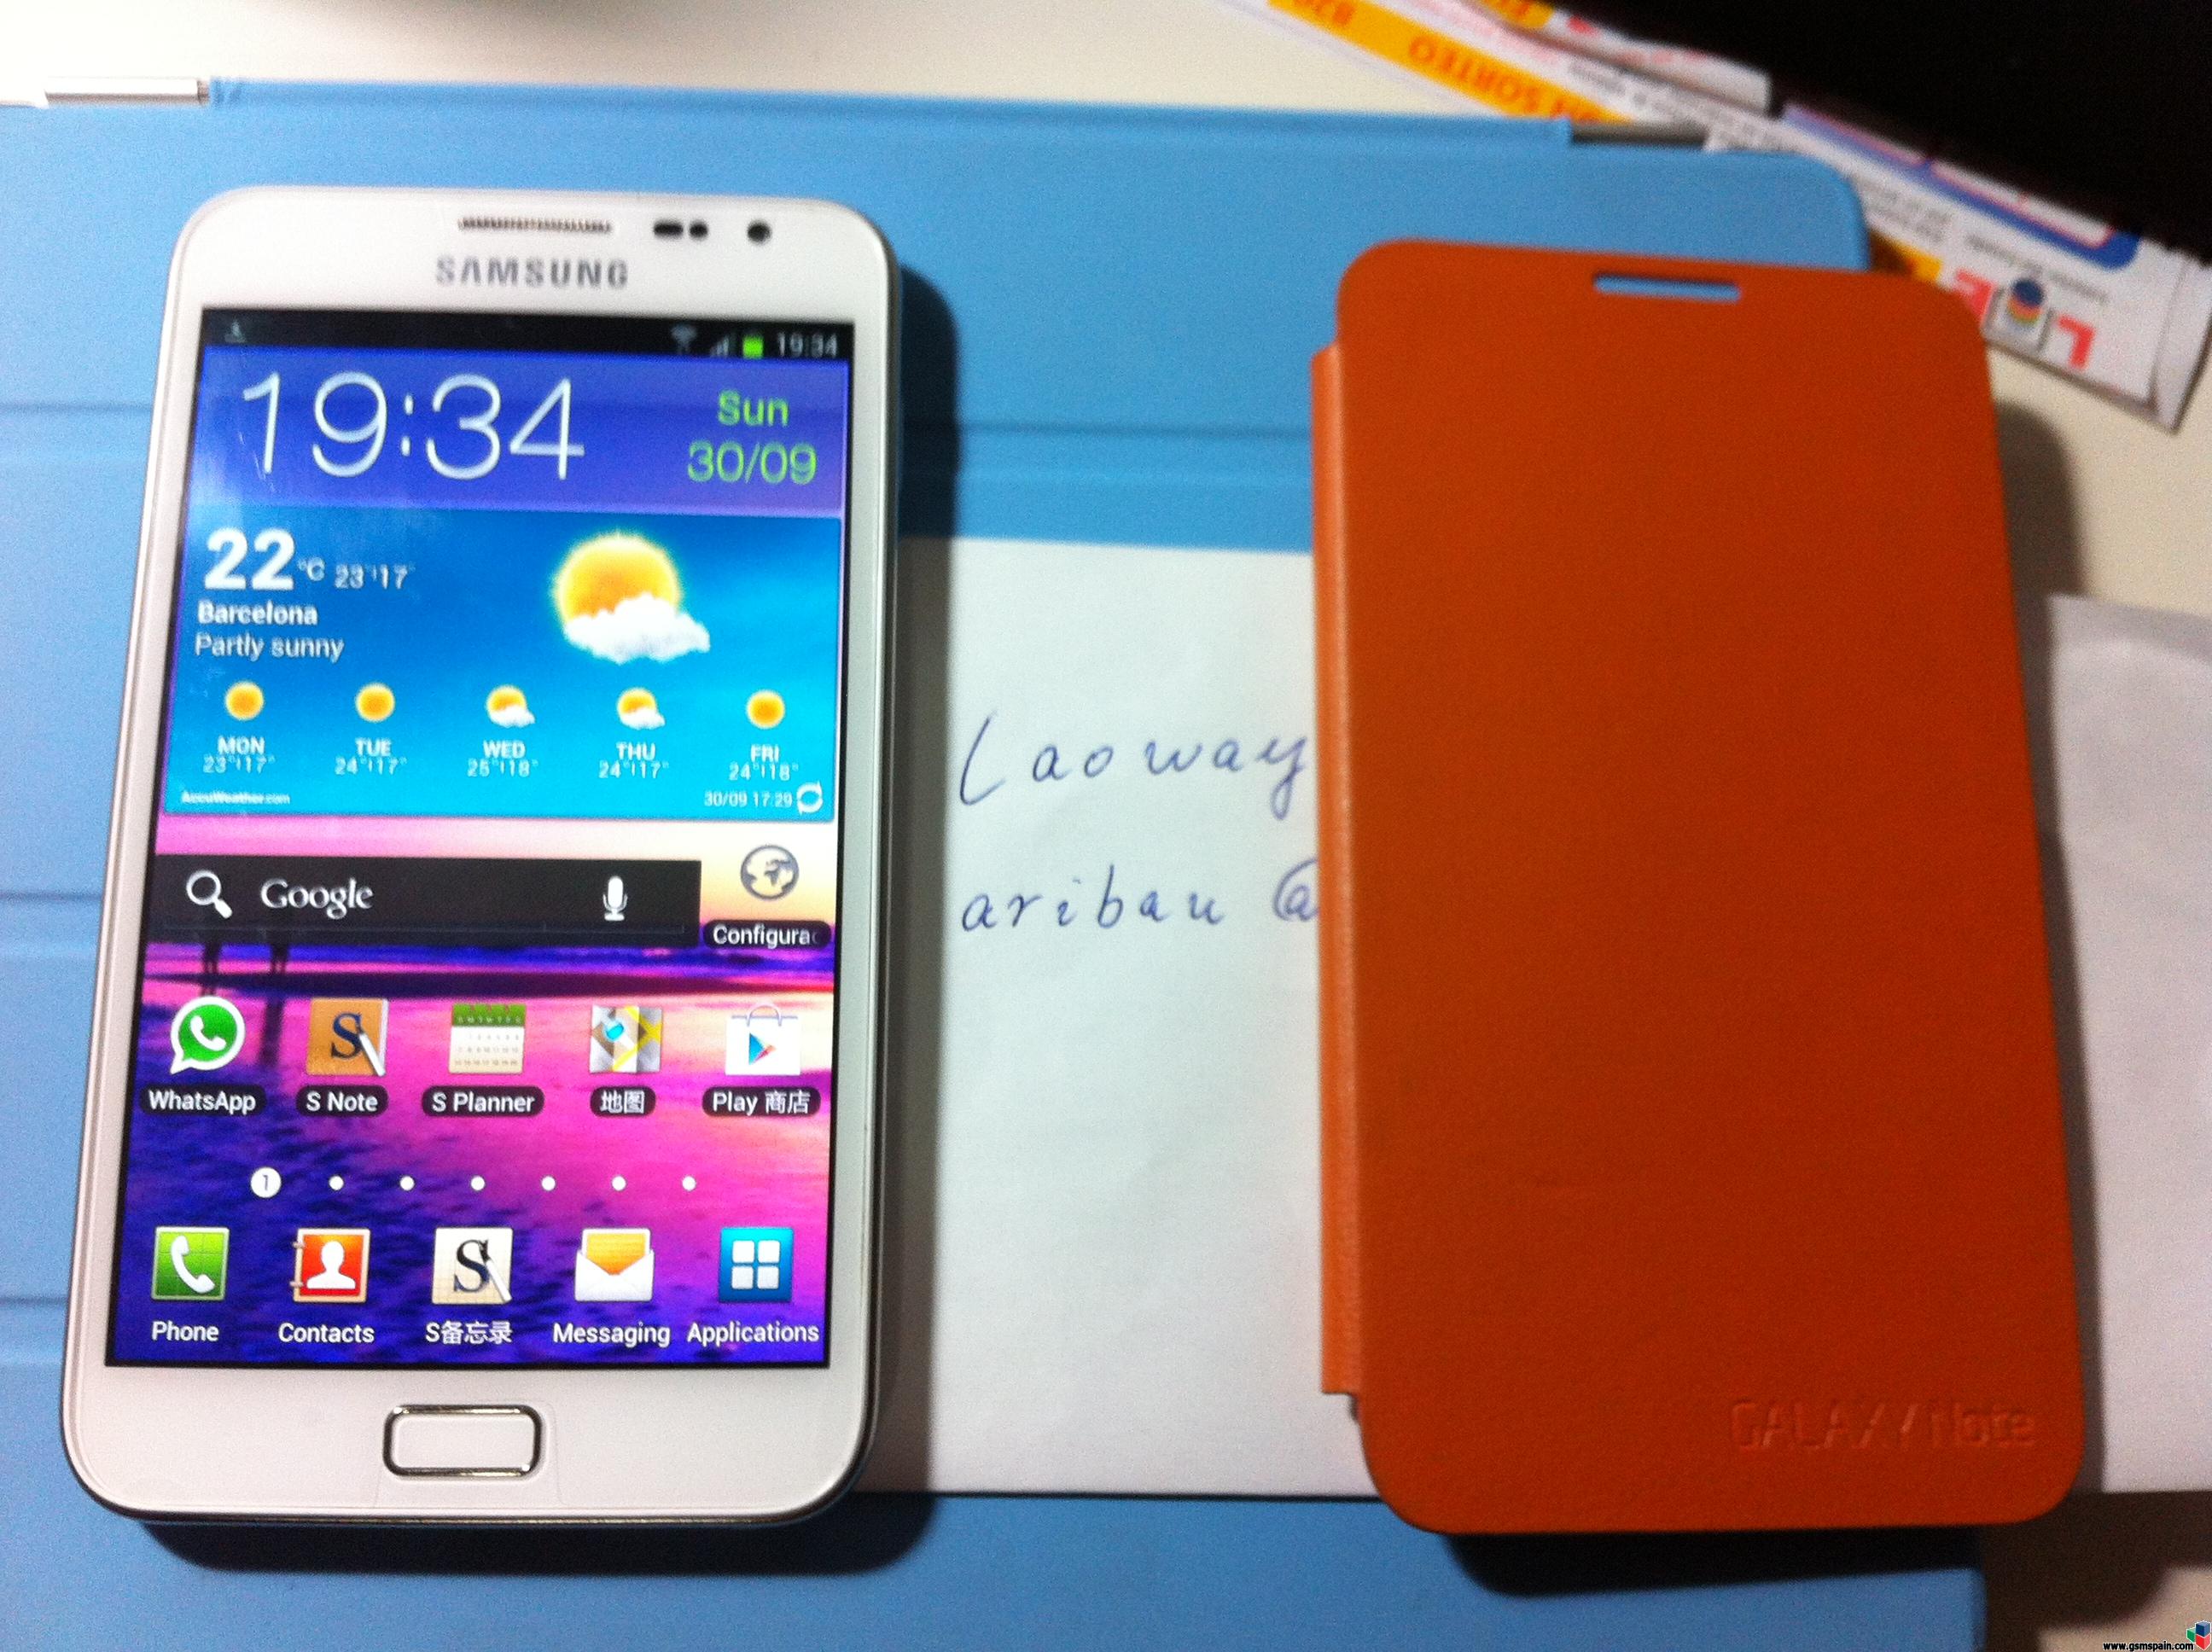 [VENDO] Samsung Galaxy Note, BLANCO, Libre, con factura de abril de 2012.